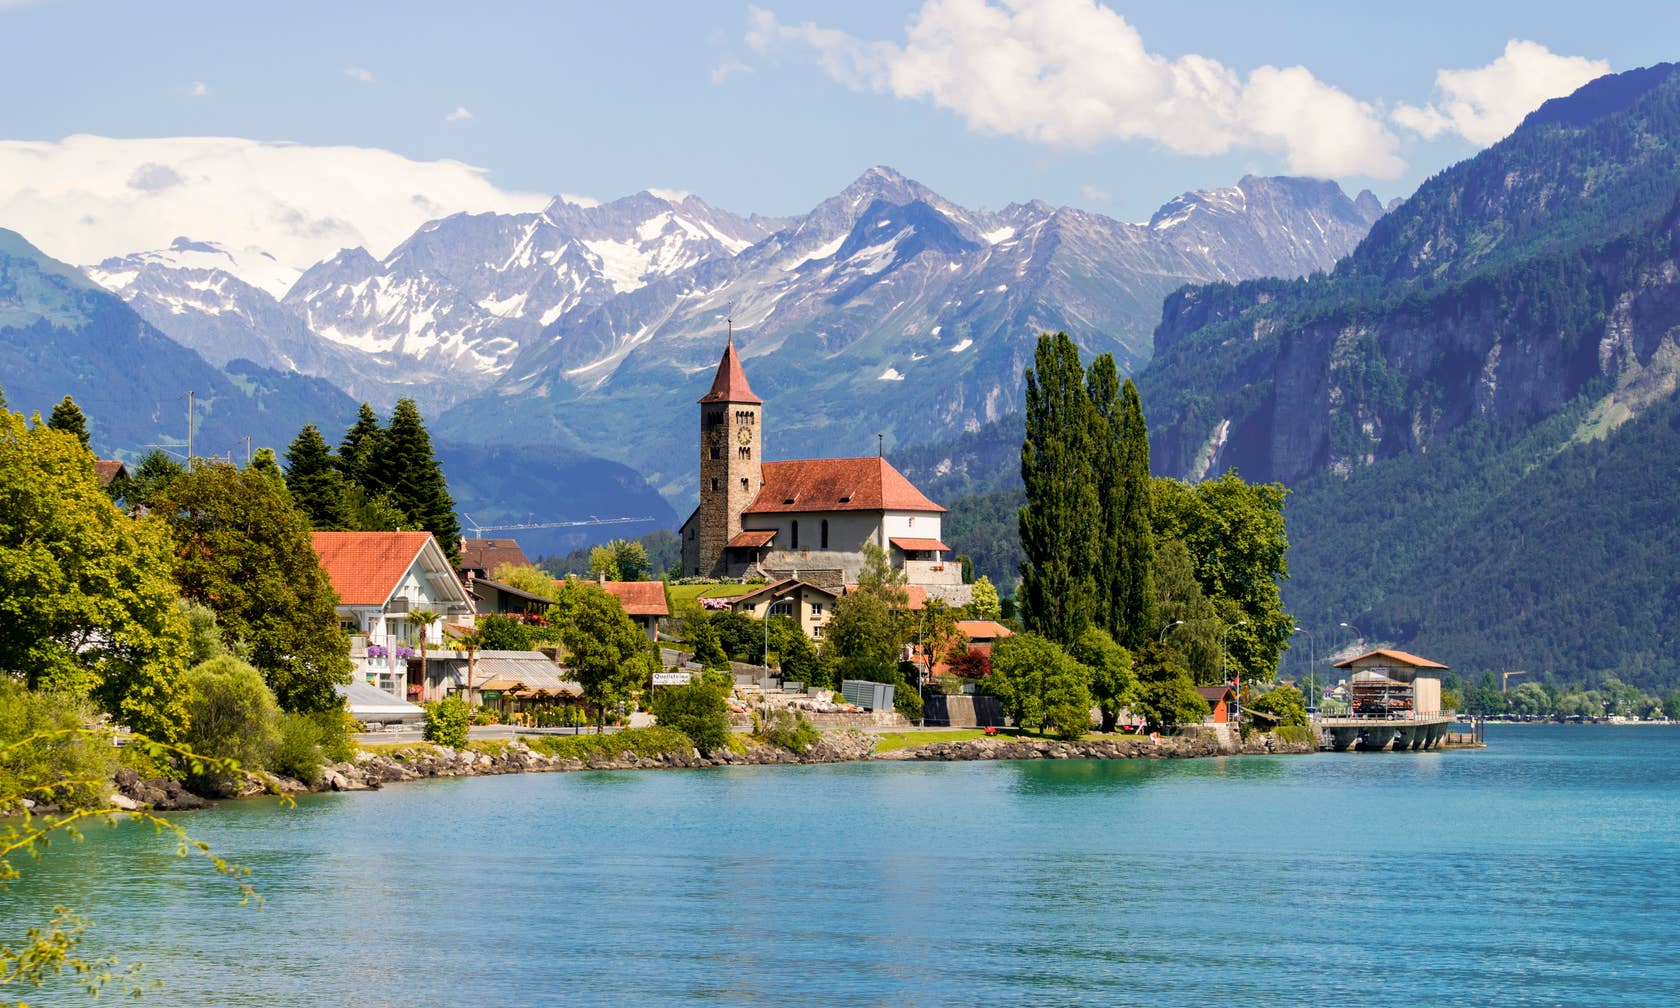 Affitti per le vacanze a Svizzera